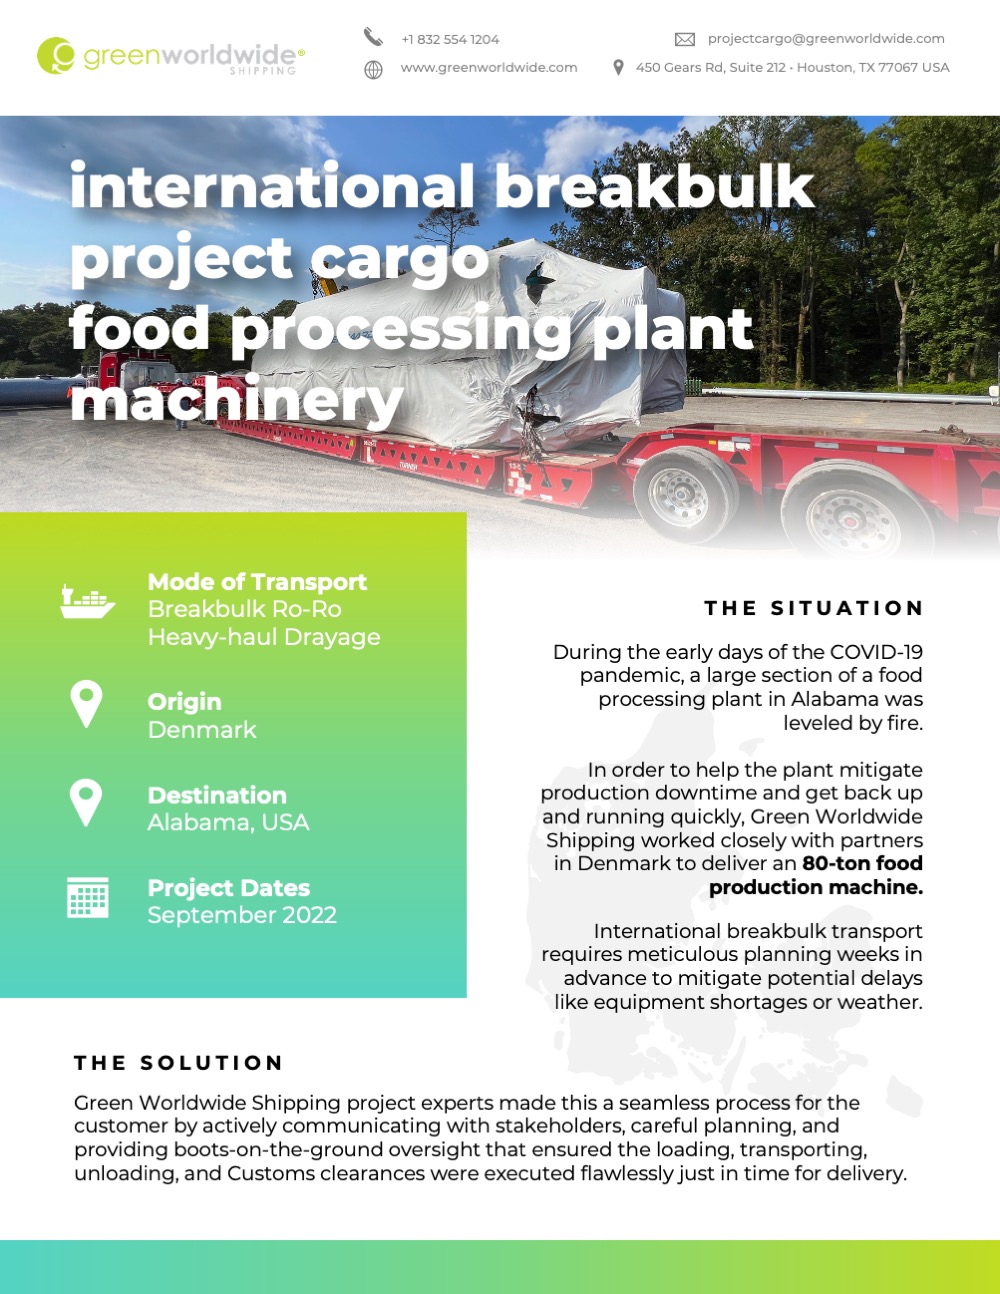 International Breakbulk Project Cargo Food Processing Plant Machinery